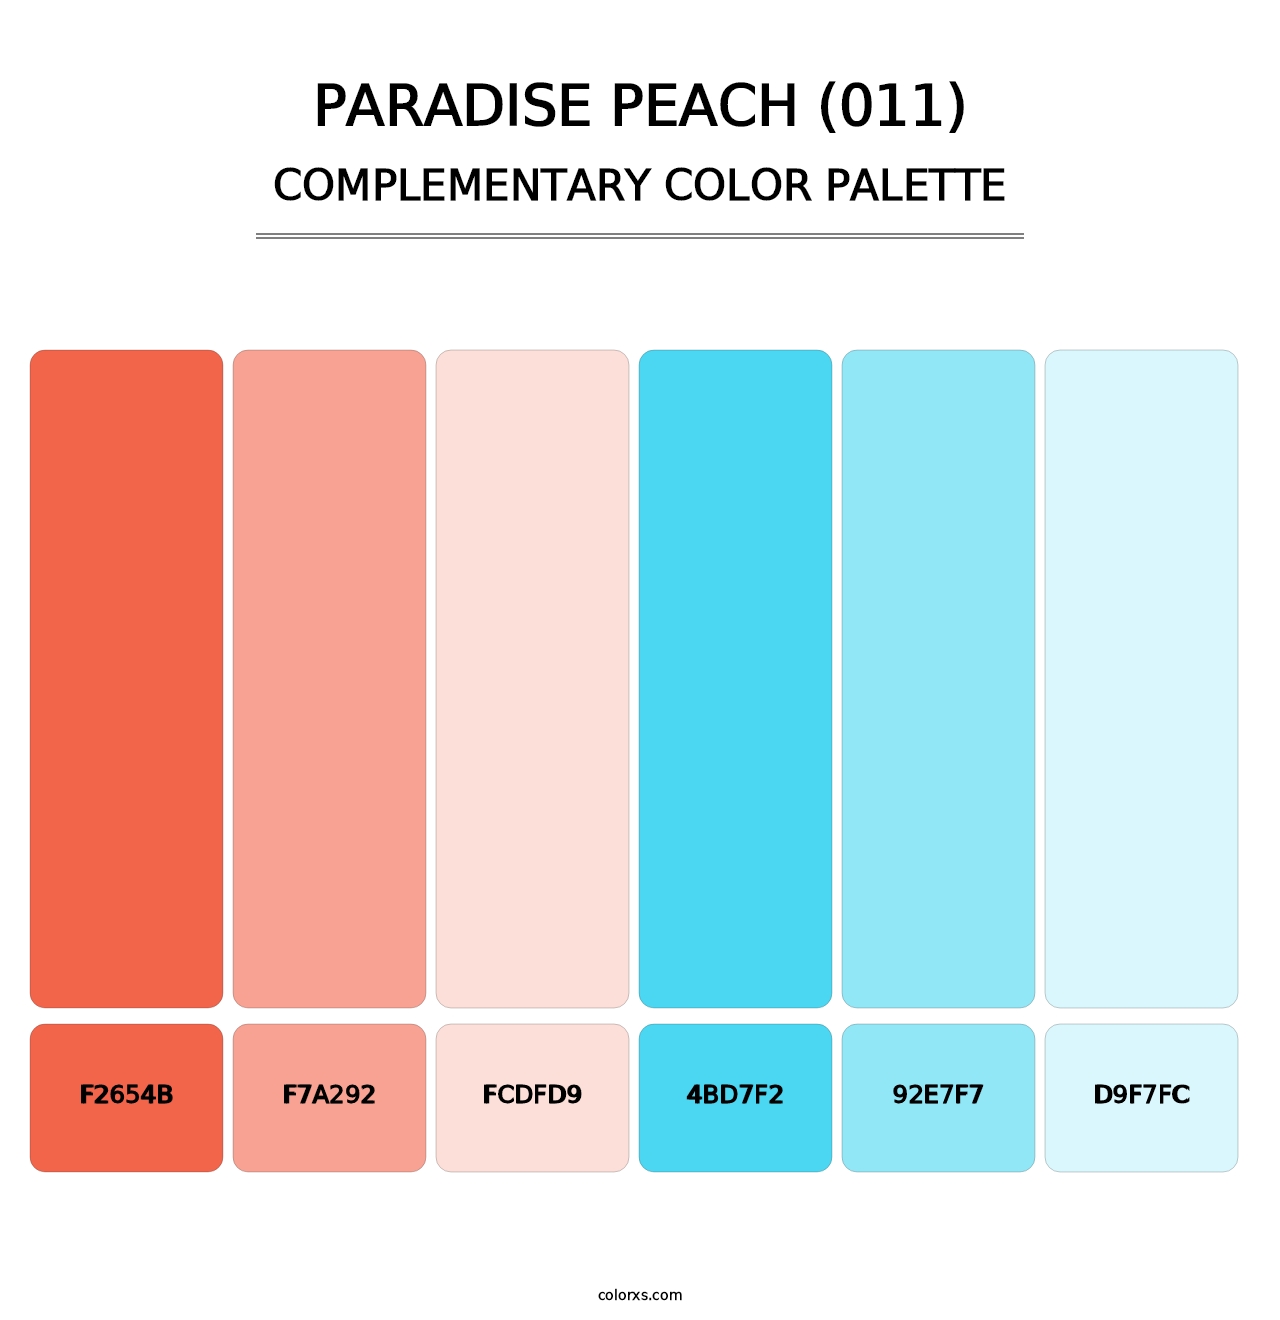 Paradise Peach (011) - Complementary Color Palette